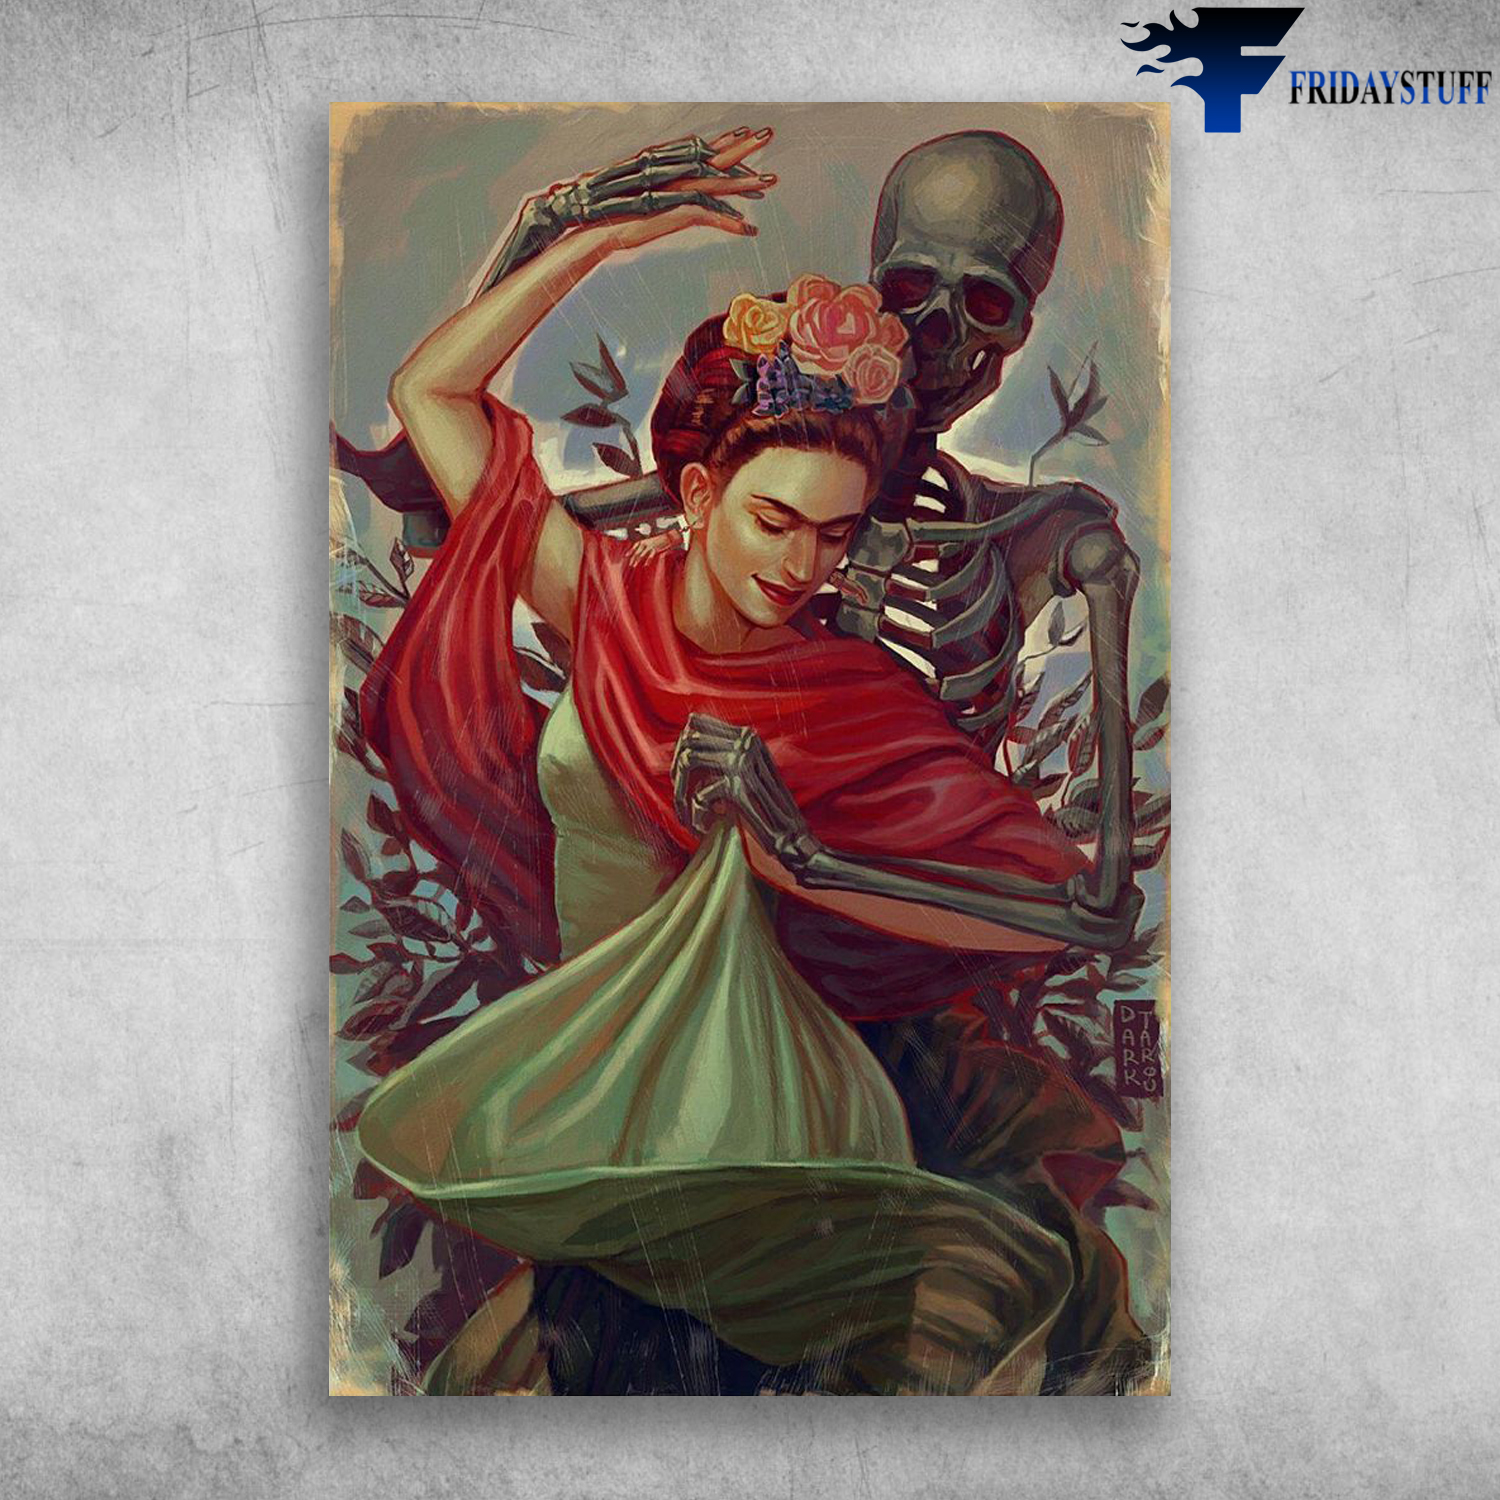 Frida Kahlo Death Painting A Dance With Death